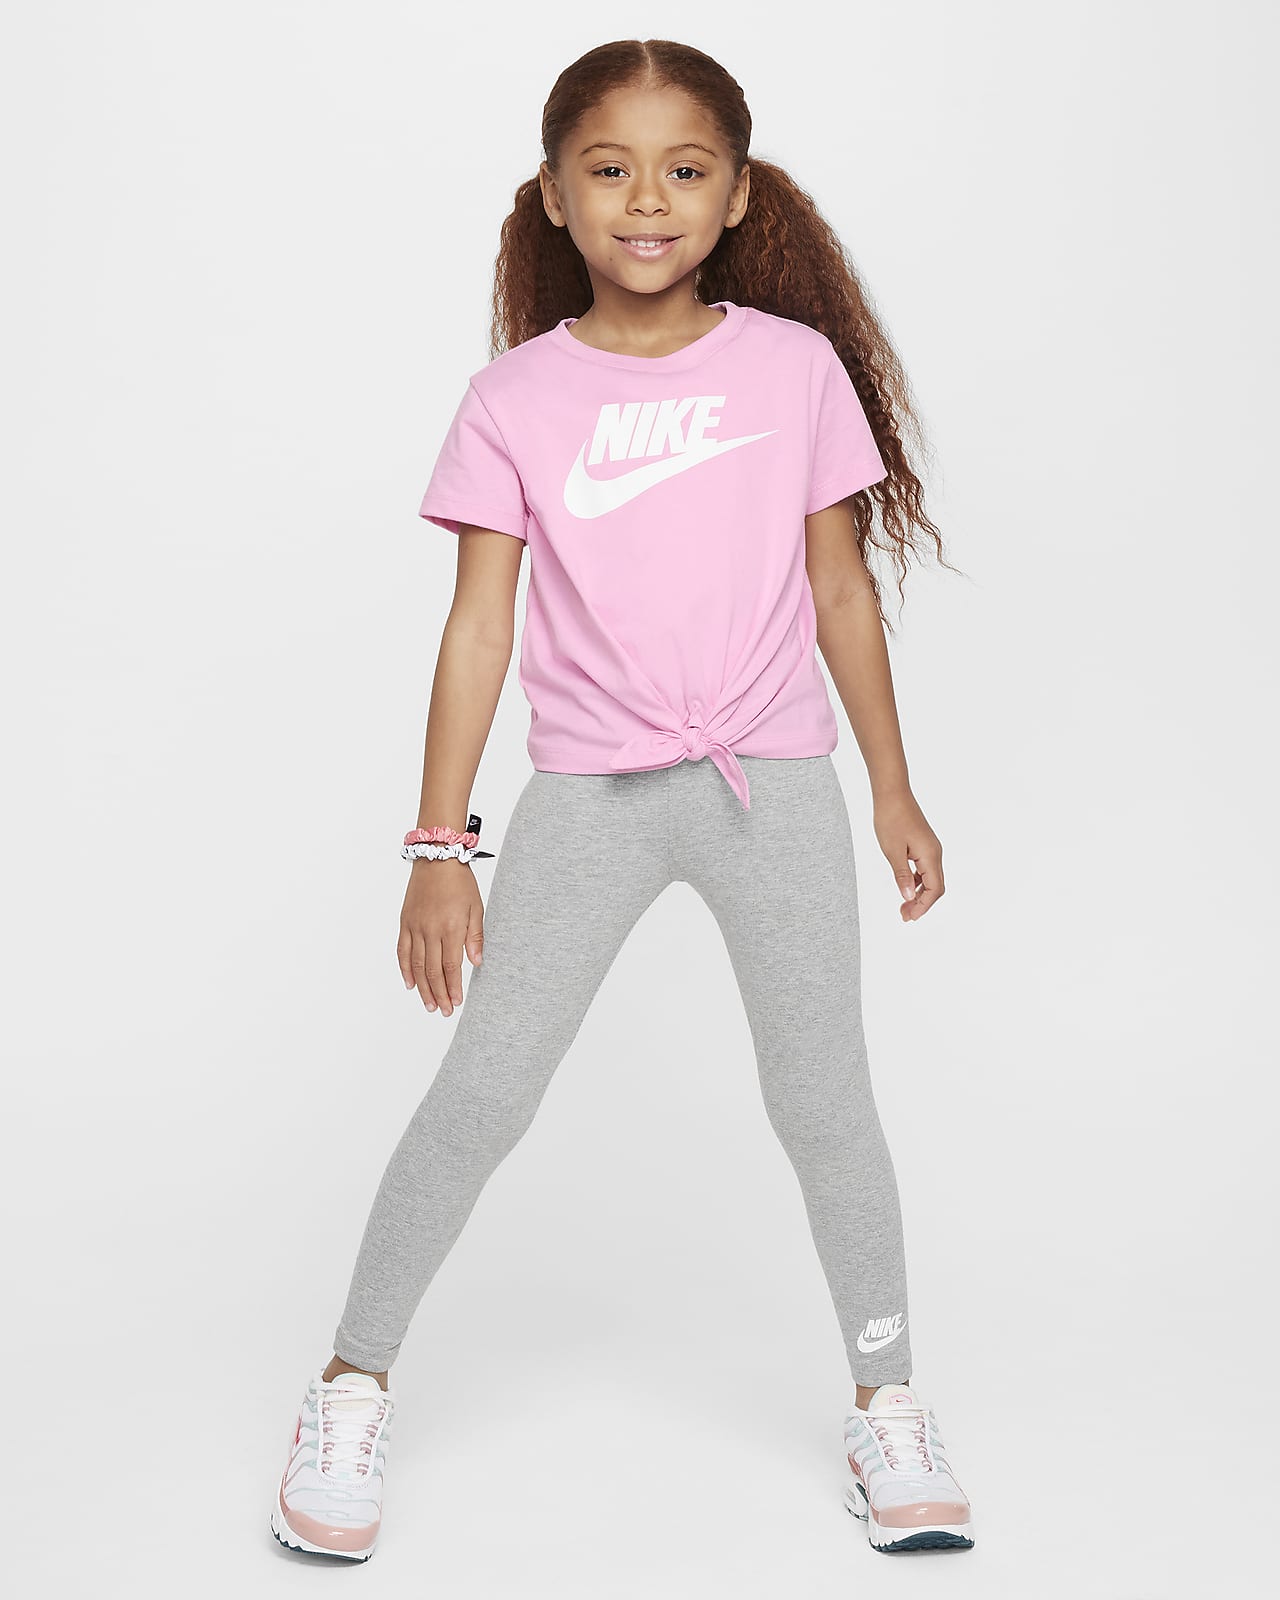 Nike Little Kids' Tie Front Tee and Leggings Set